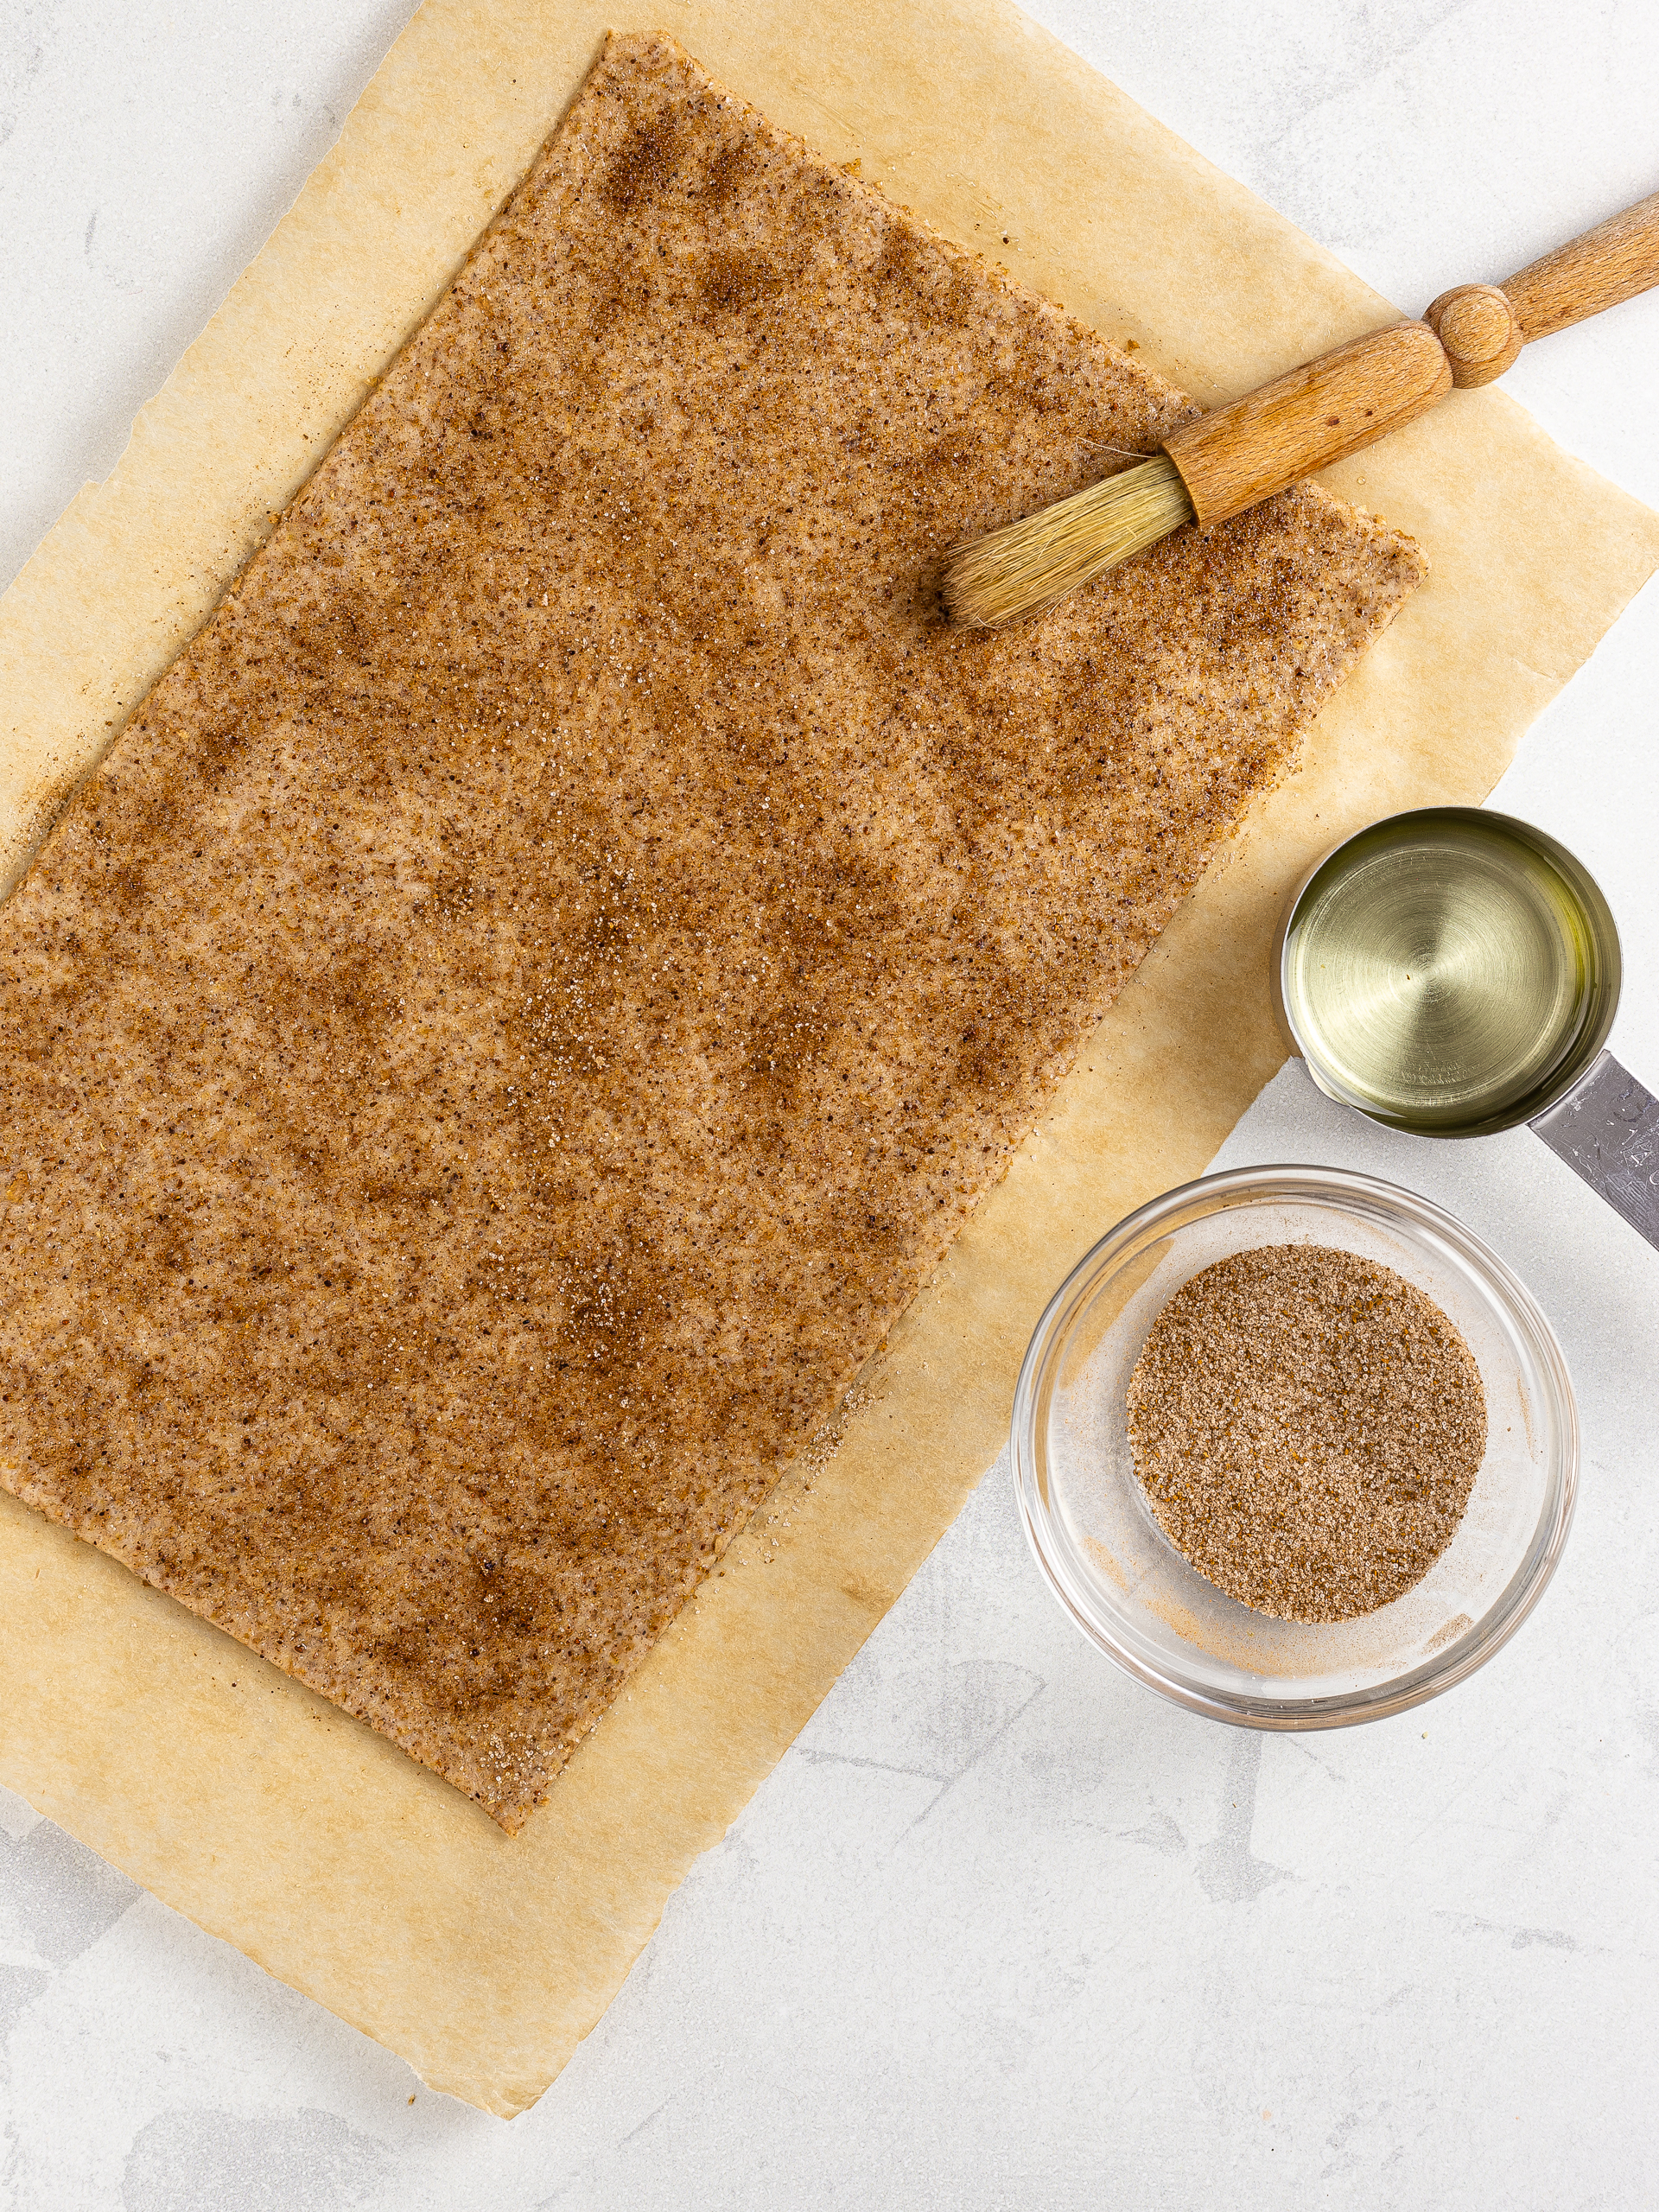 cinnamon toast crunch dough with cinnamon coating